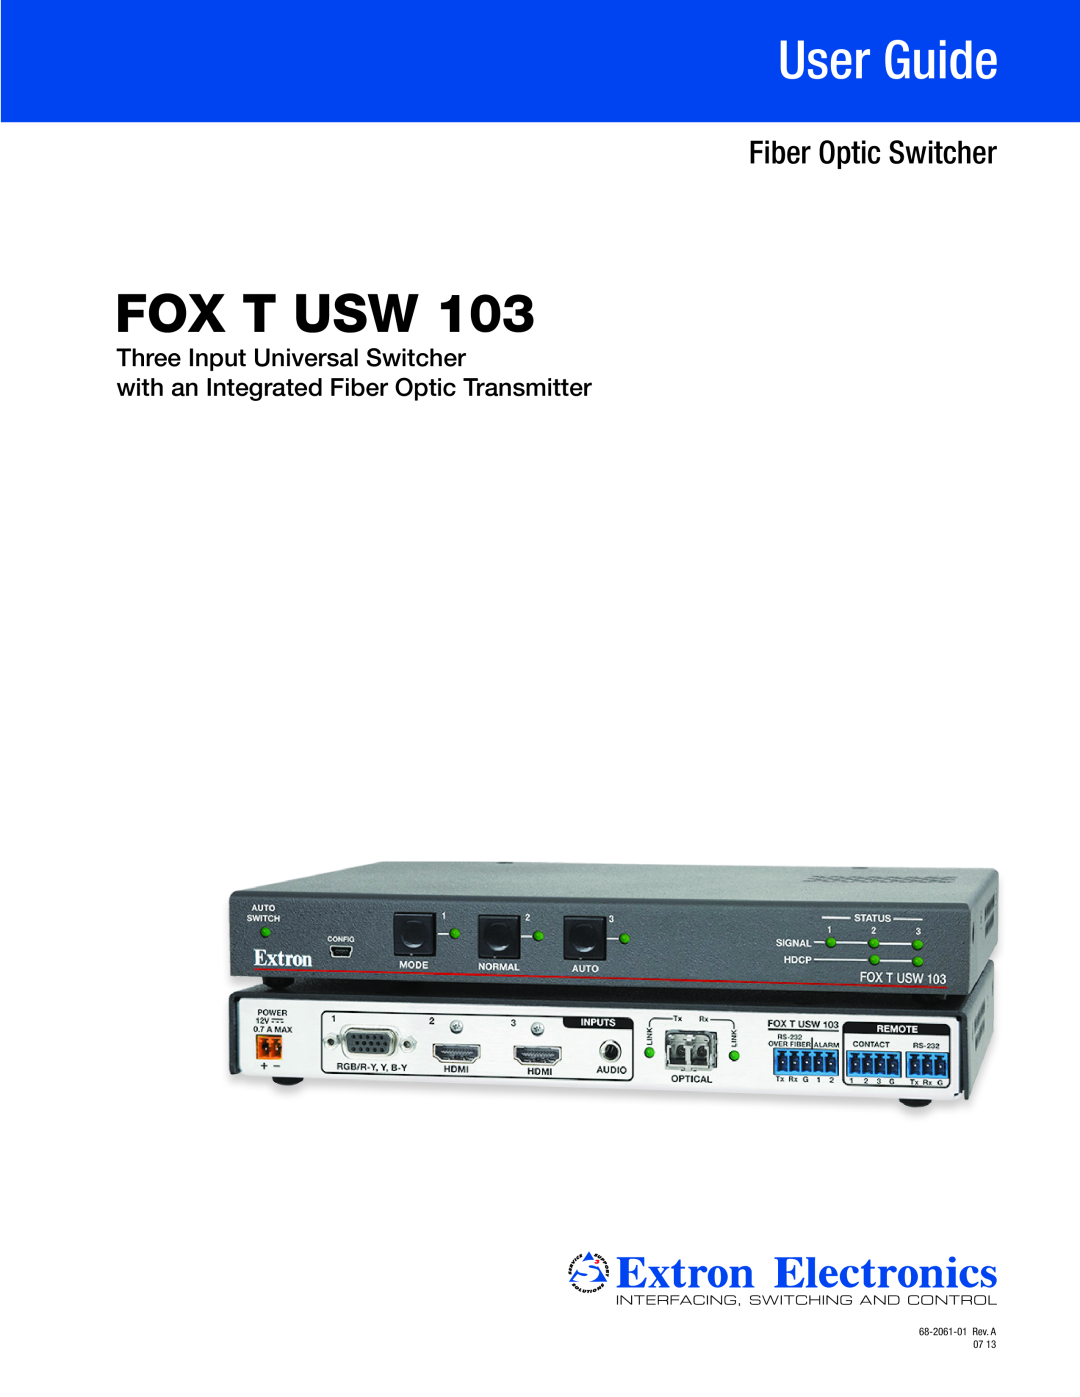 Extron electronic FOX T USW 103 manual Fox T Usw, Fiber Optic Switcher, User Guide, Three Input Universal Switcher 